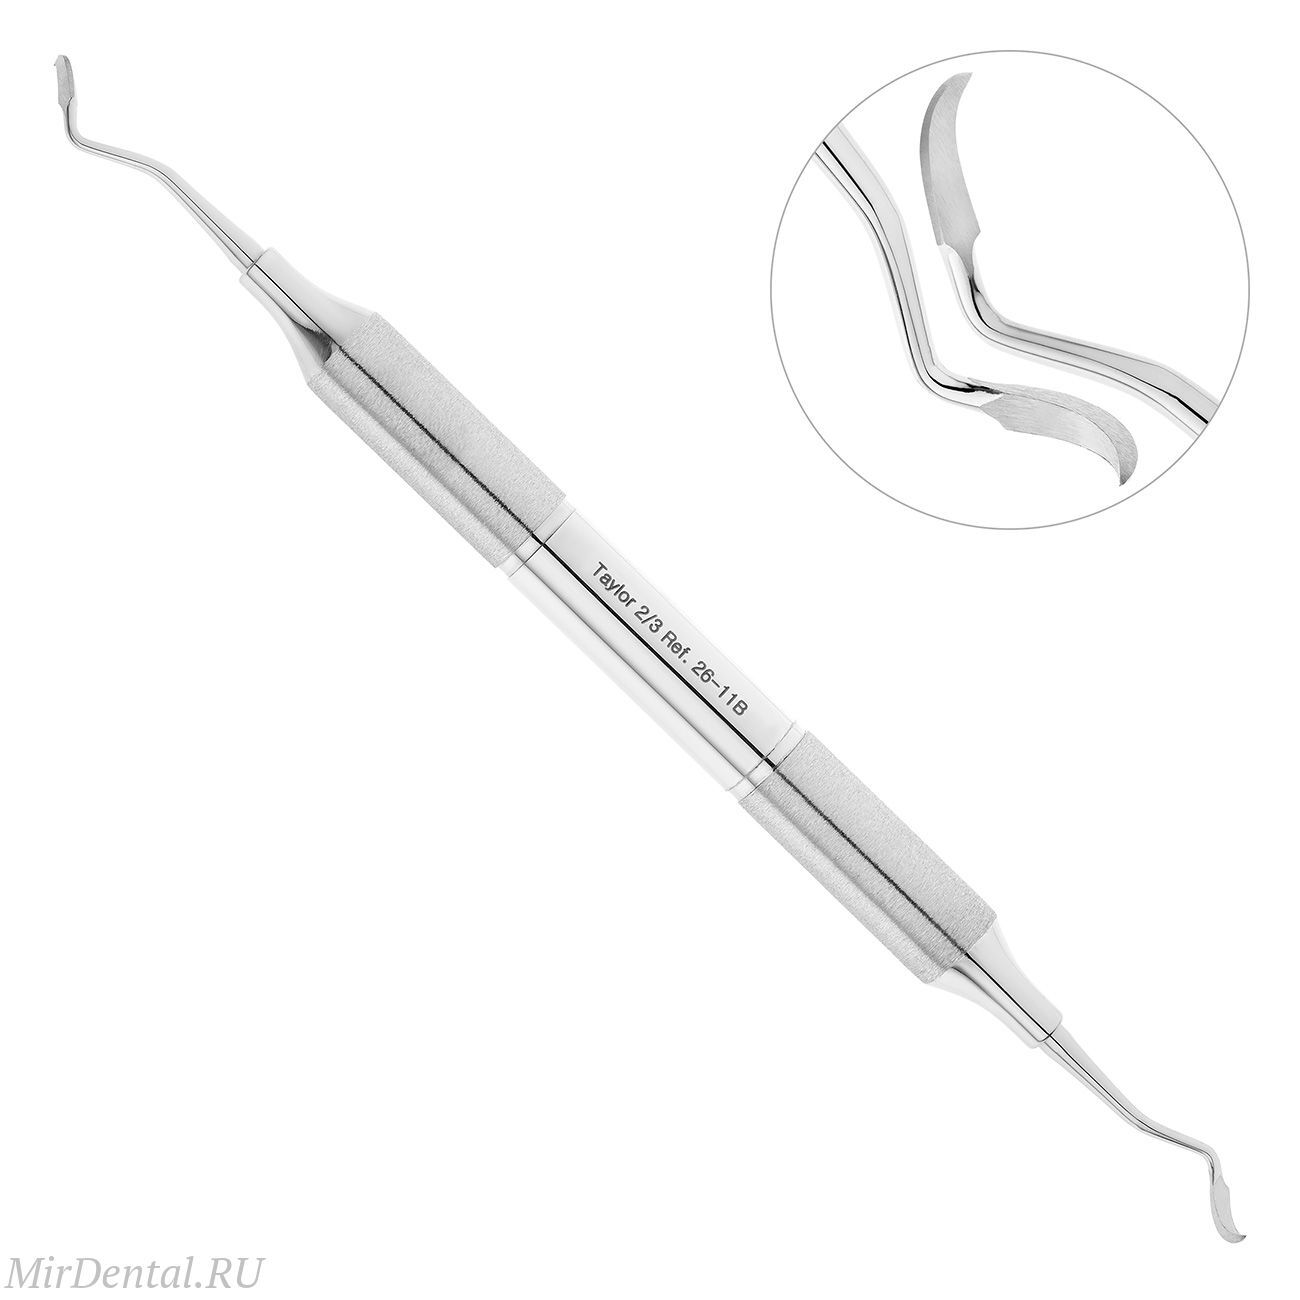 Скейлер парадонтологический, форма T2/3, ручка DELUXE, диаметр 10 мм, 26-11B*